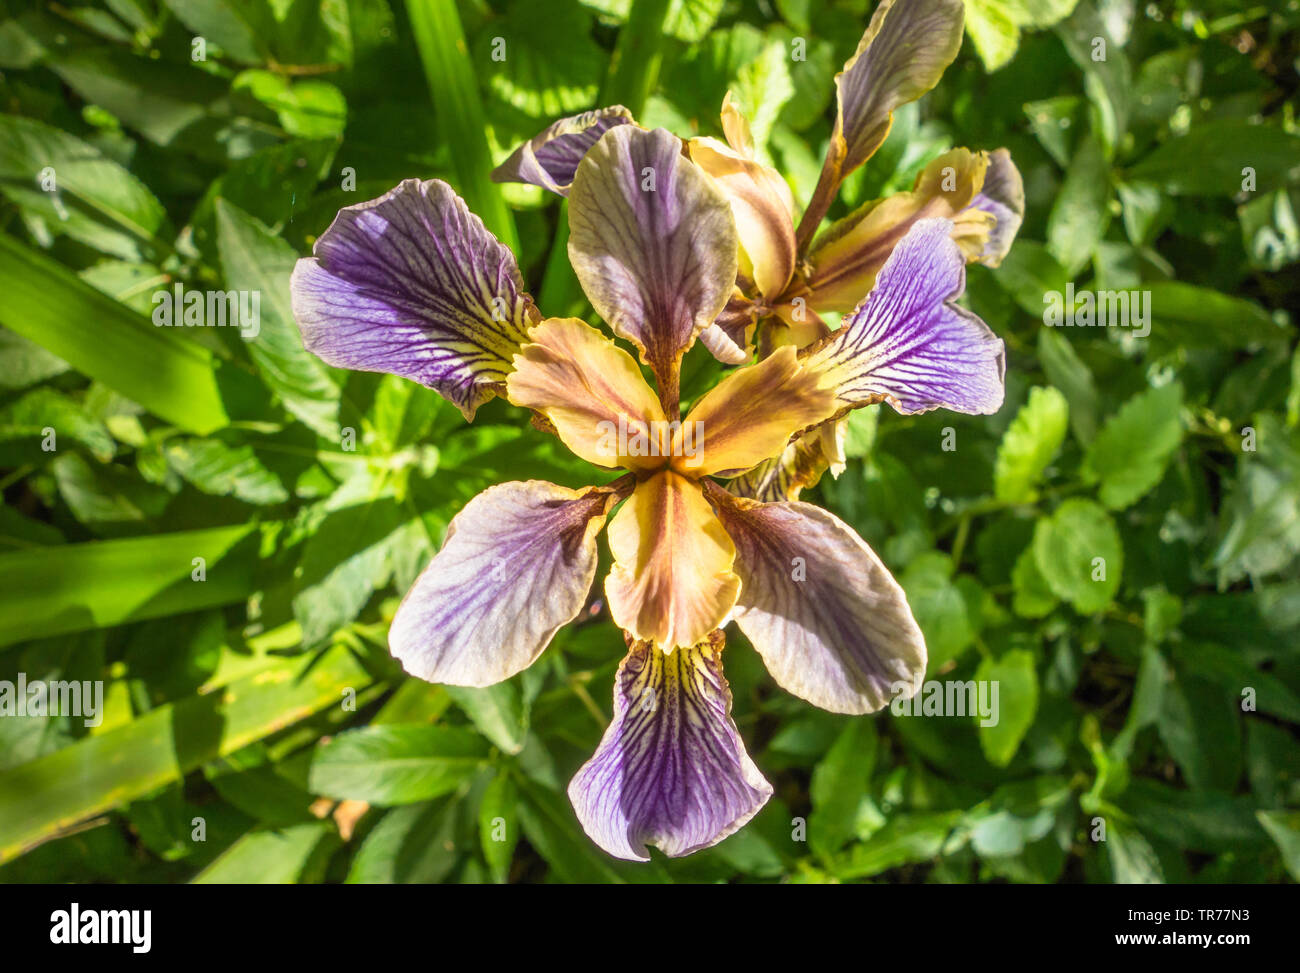 Puzzolente (Iris Iris foetidissima) cresce in una riserva naturale in Herefordshire (UK) Campagna. Maggio 2019 Foto Stock